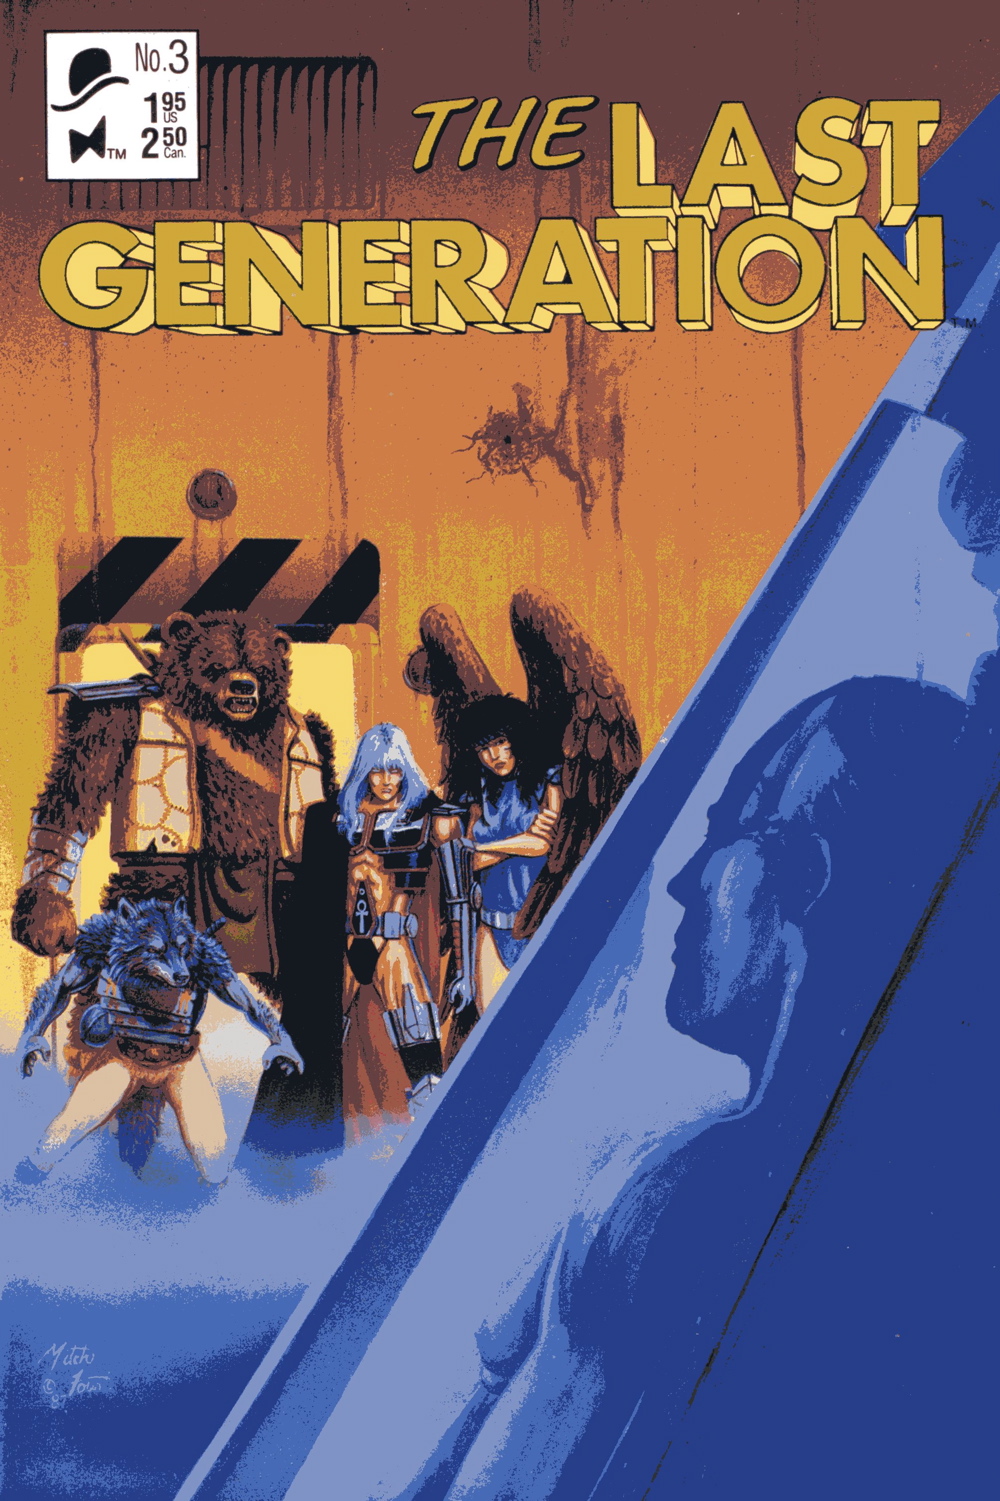 [last-generation-issue-3.jpg]